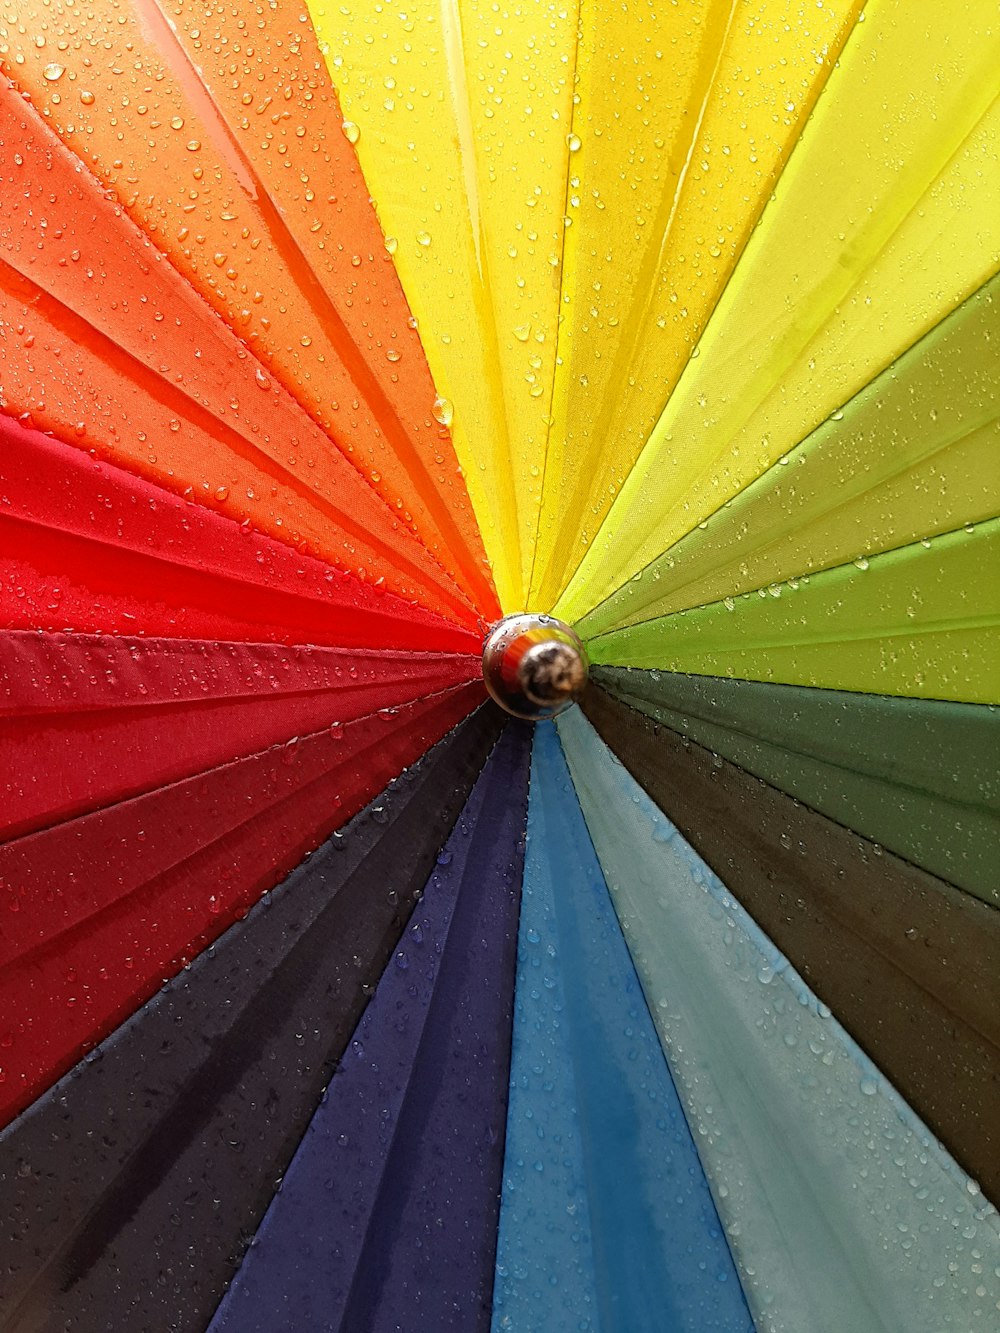 a snail on a colorful umbrella